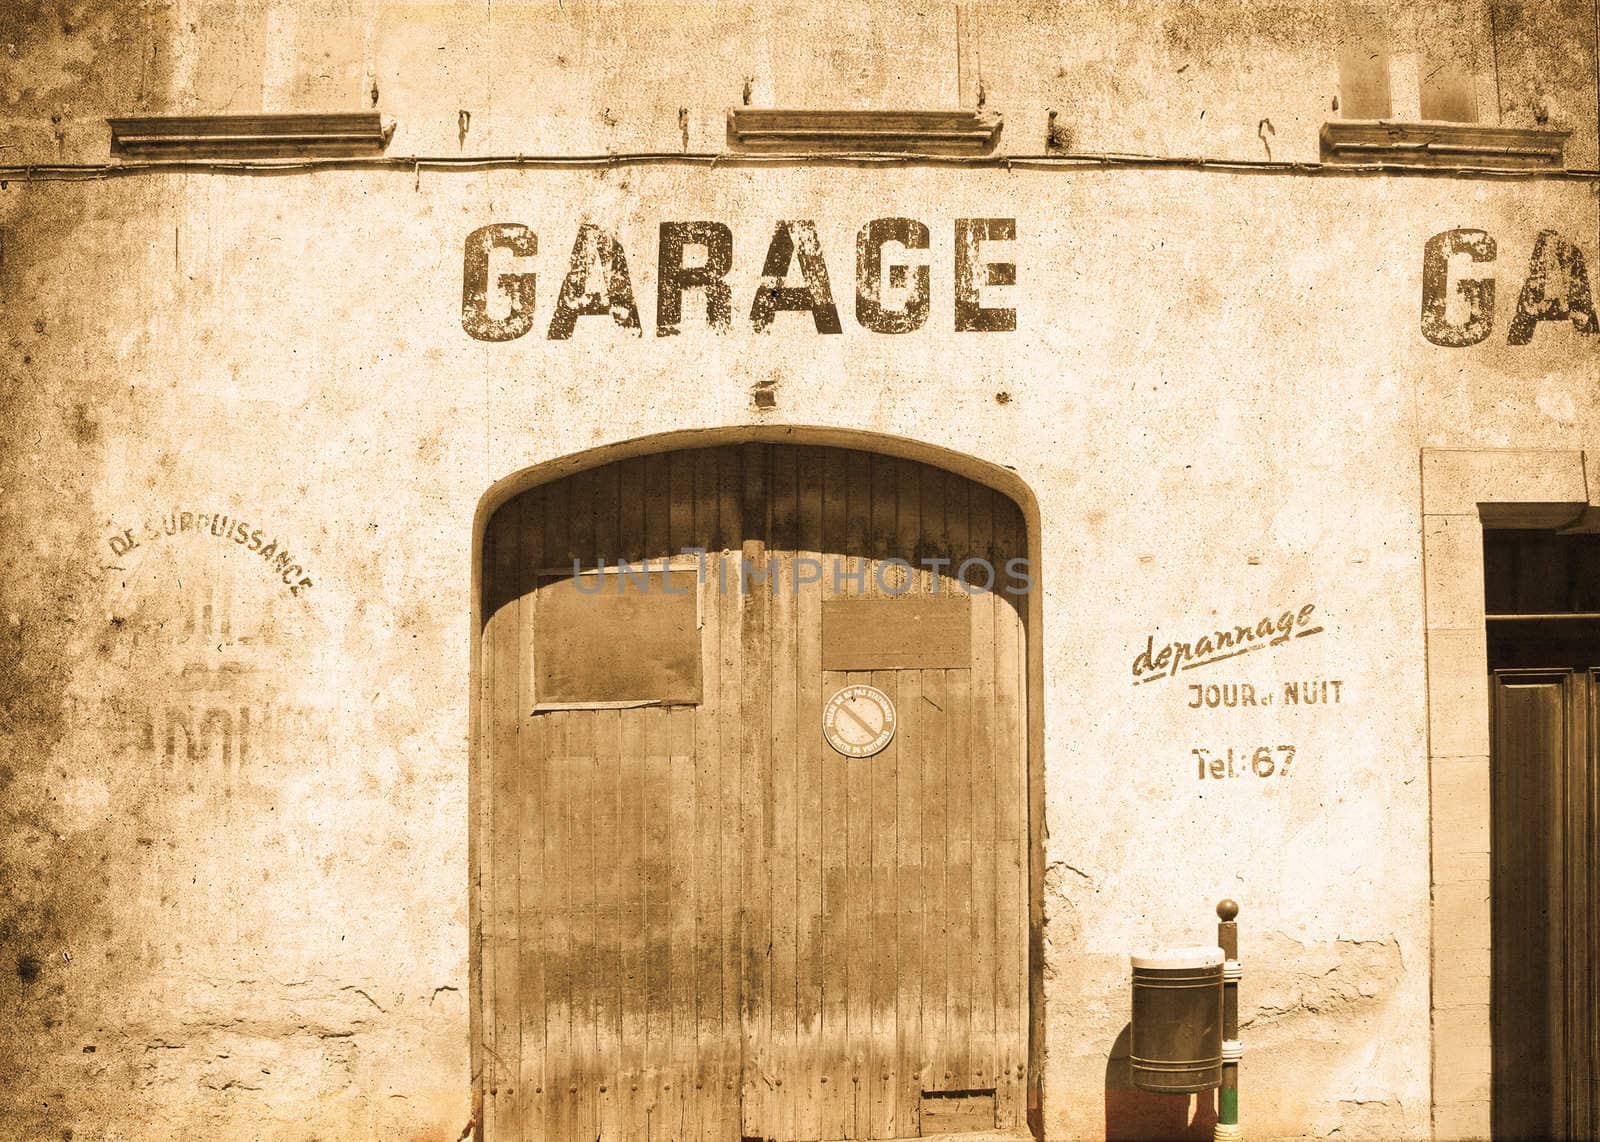 Old Garage by Hasenonkel